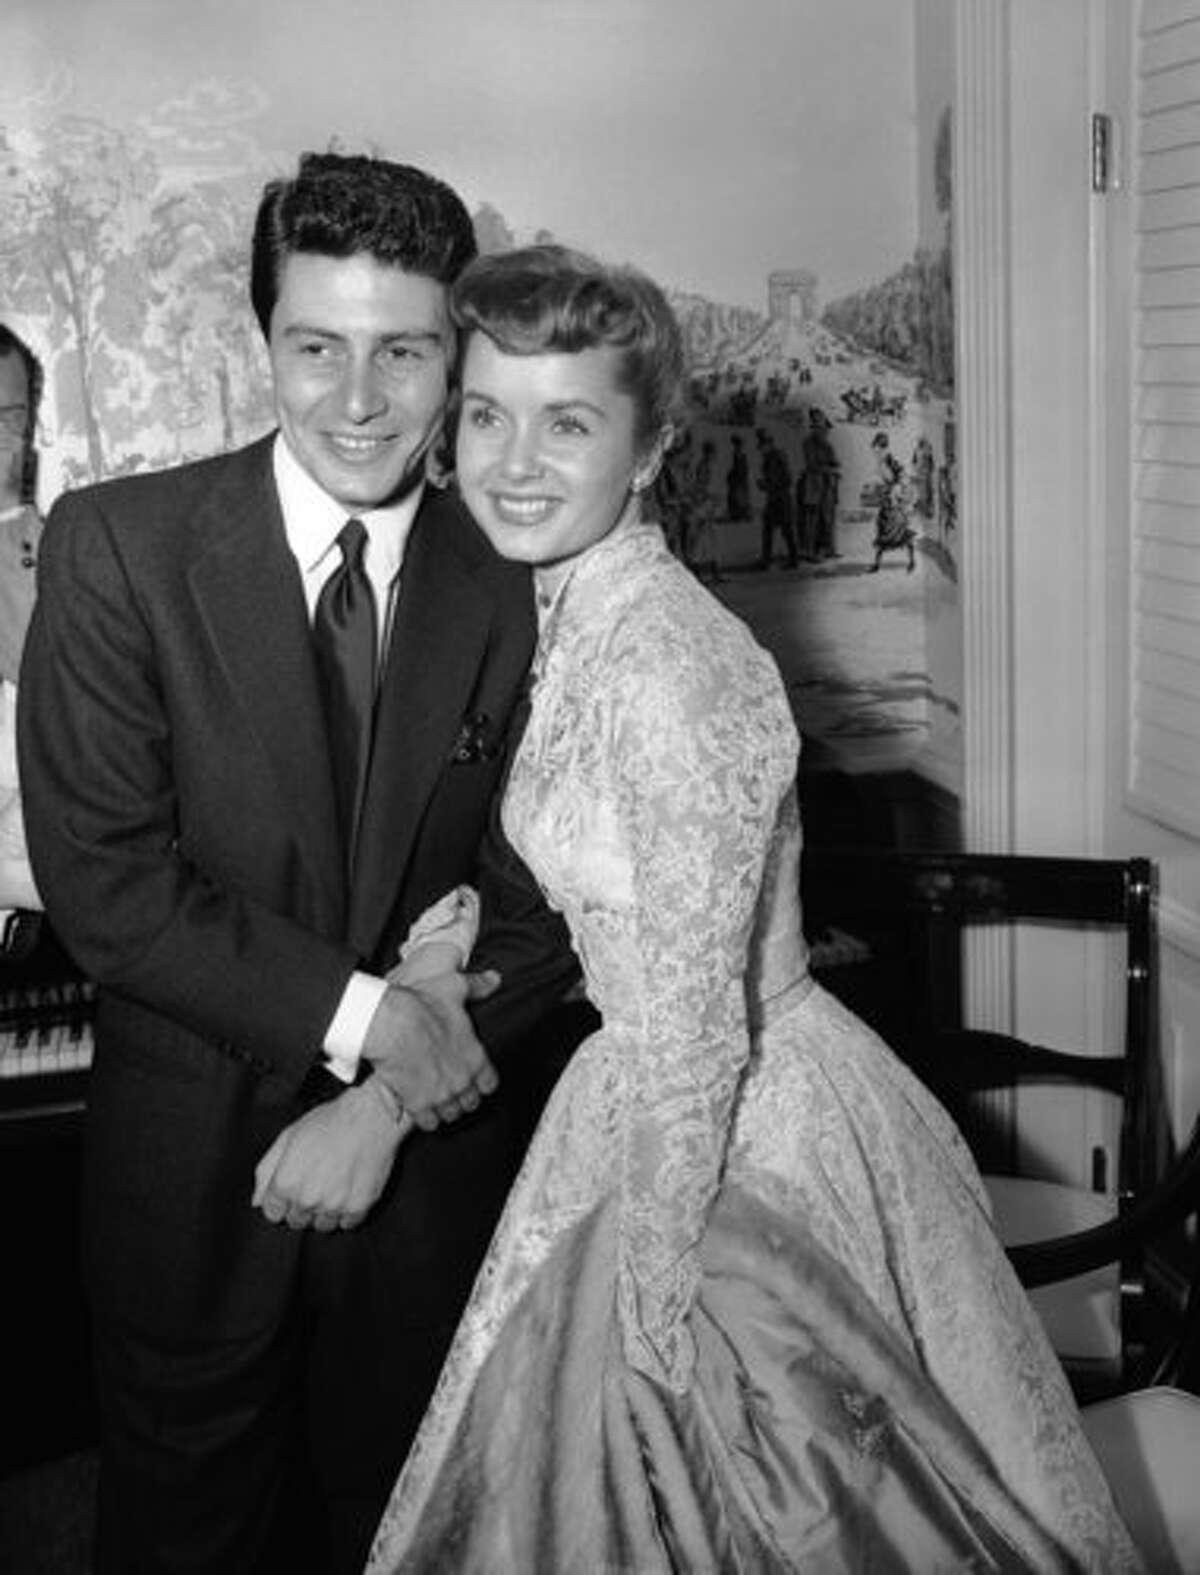 Debbie Reynolds Secret Love Affairs Exposed In Shocking 